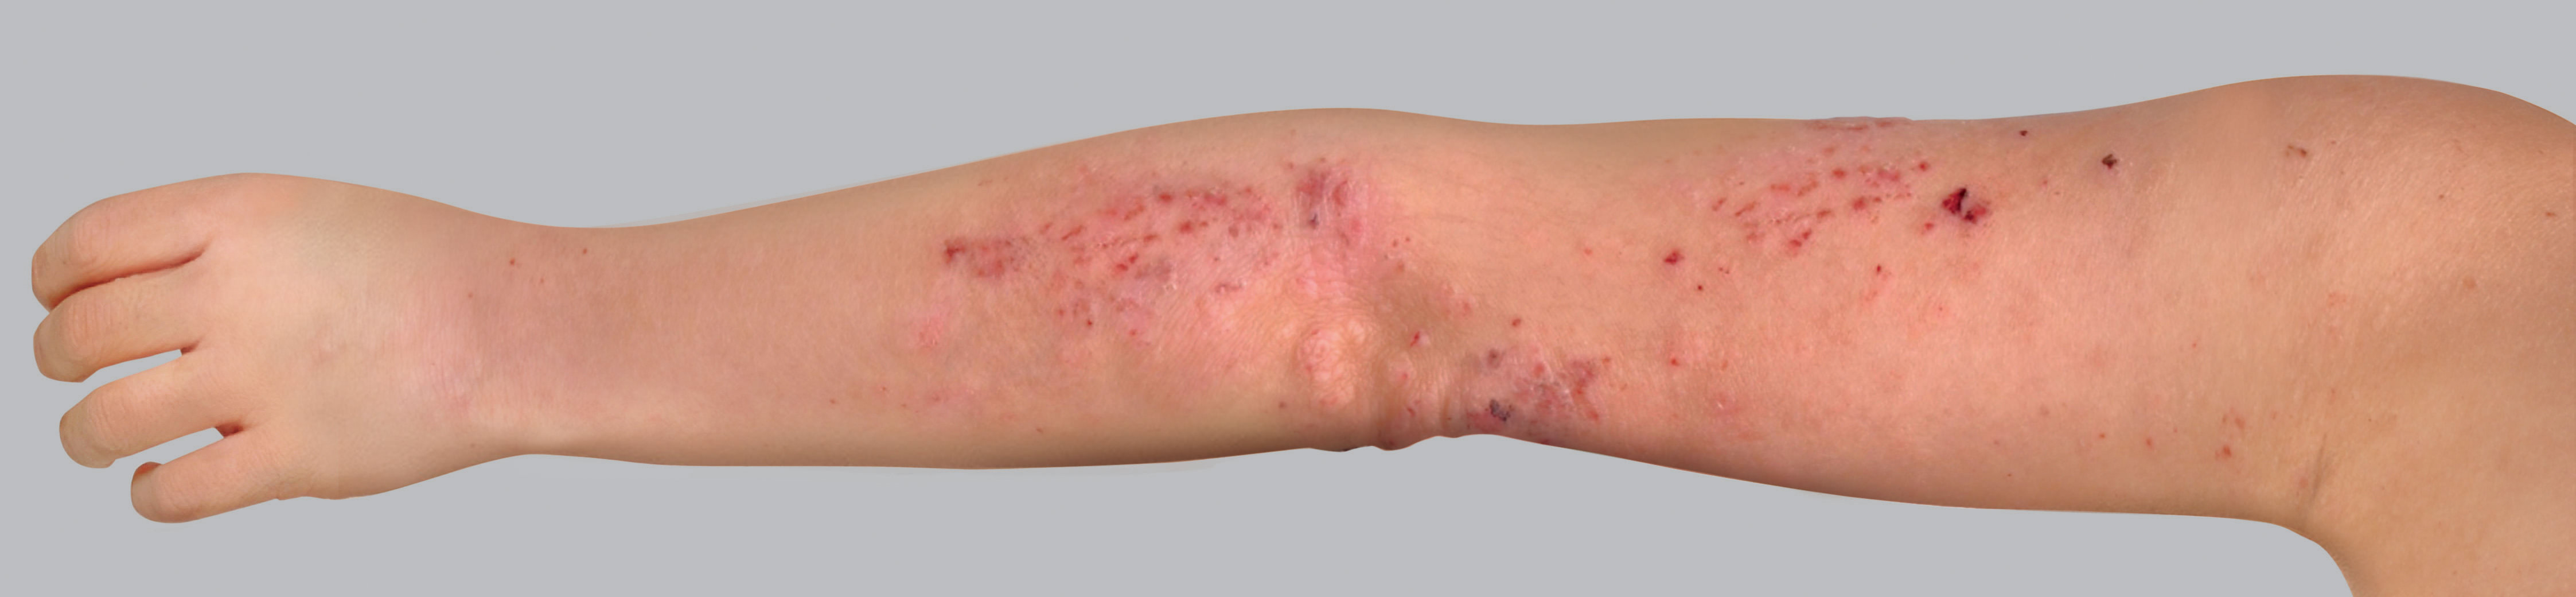 Síntomas del eczema atópico: lesiones de rascado o excoriación